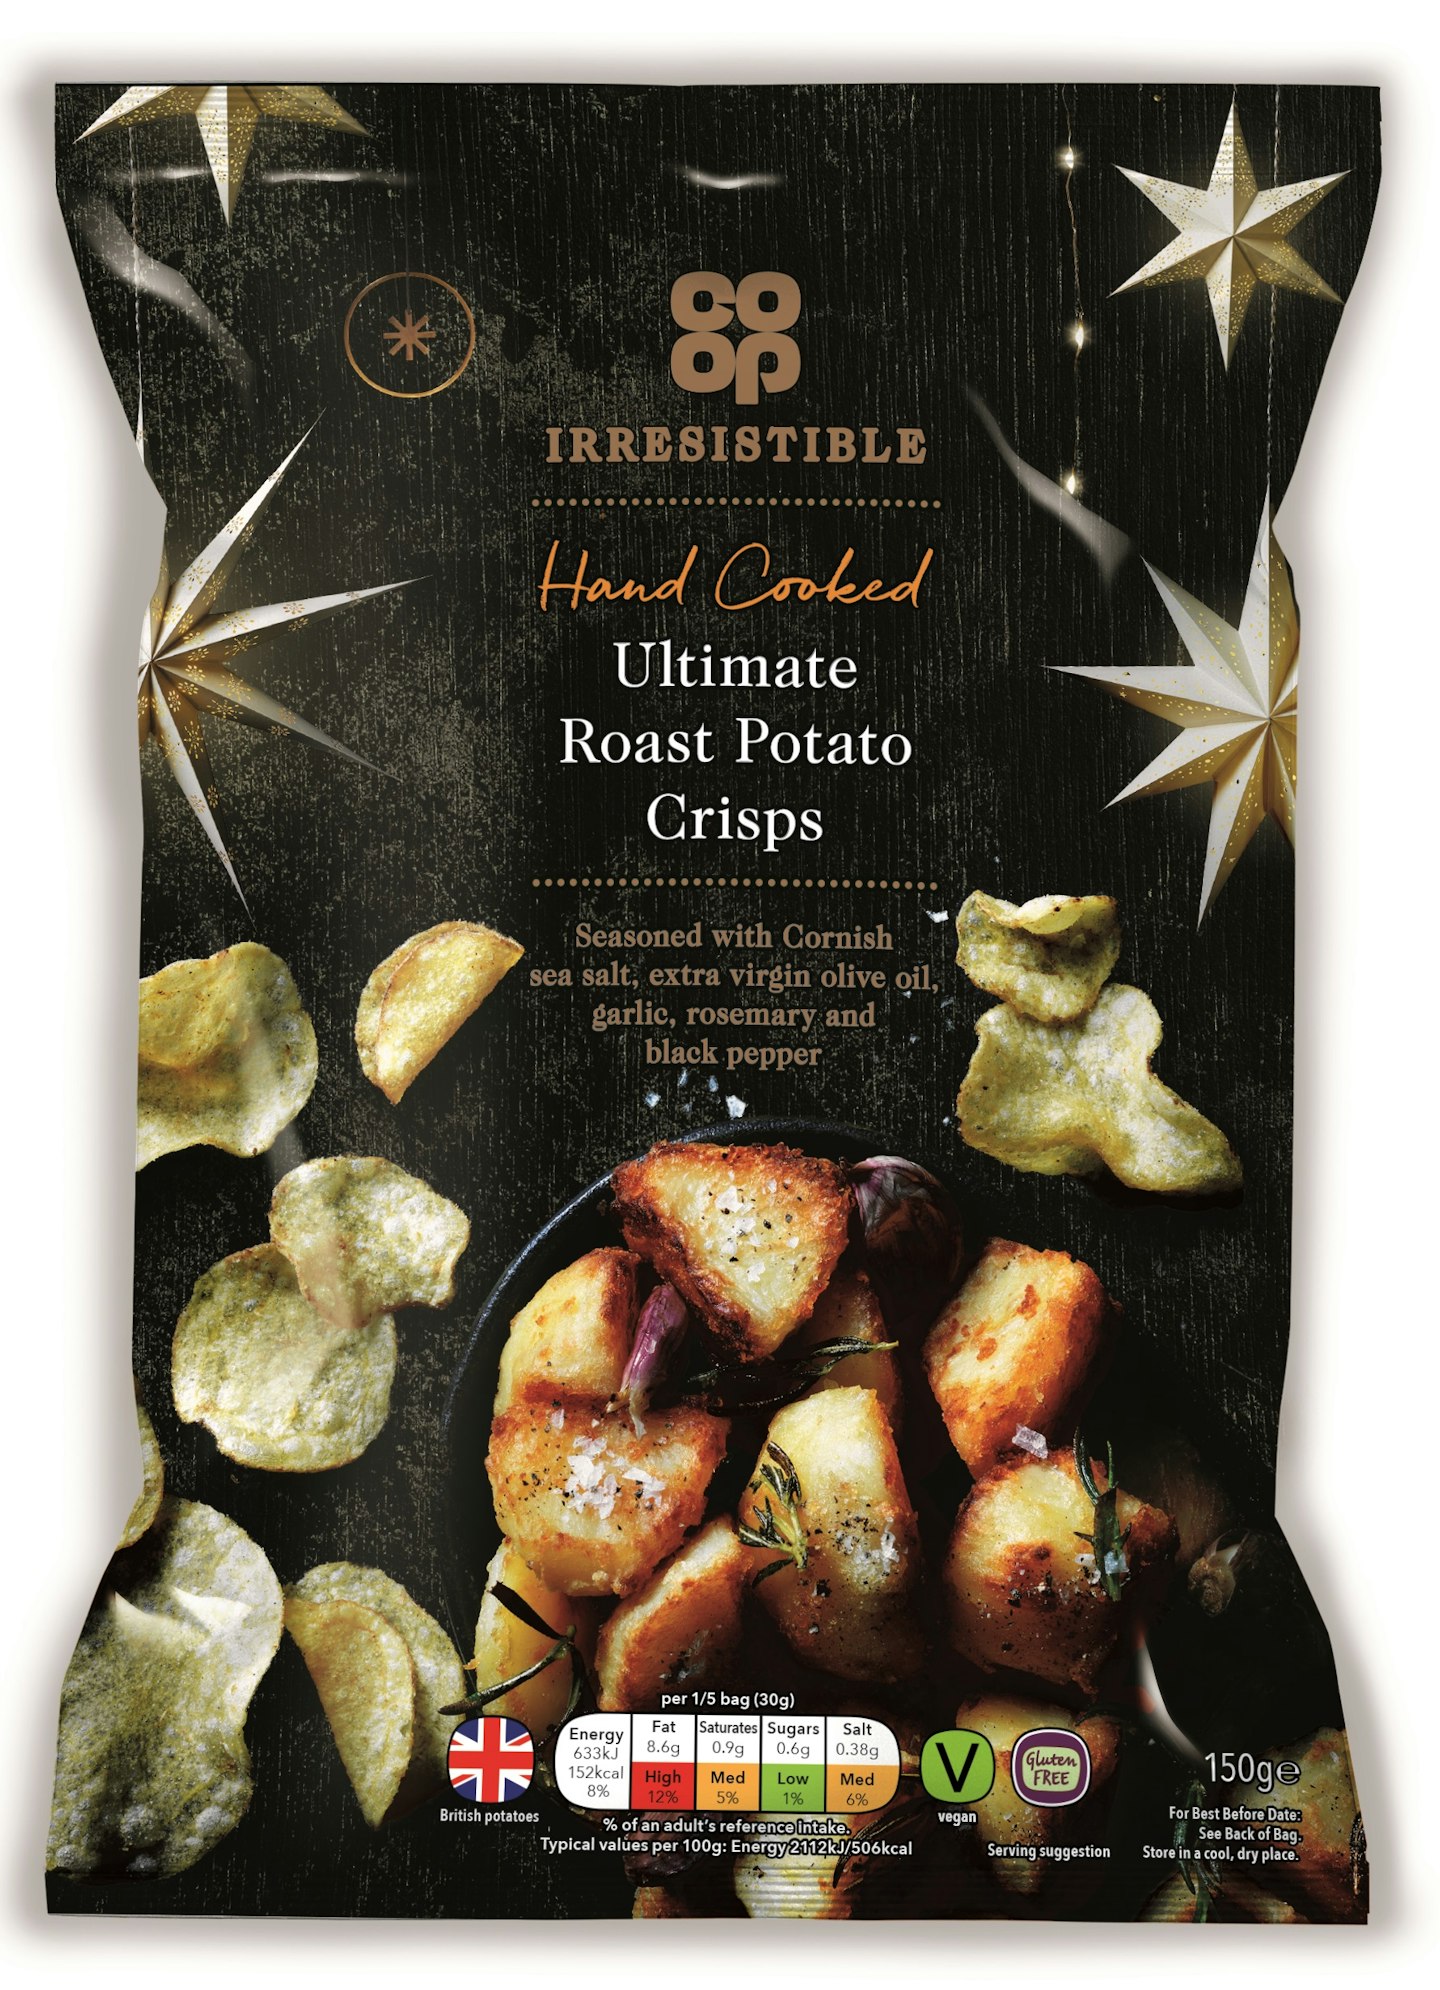 Co-op Irresistible Ultimate Roast Potato Hand Cooked Crisps, £1.35